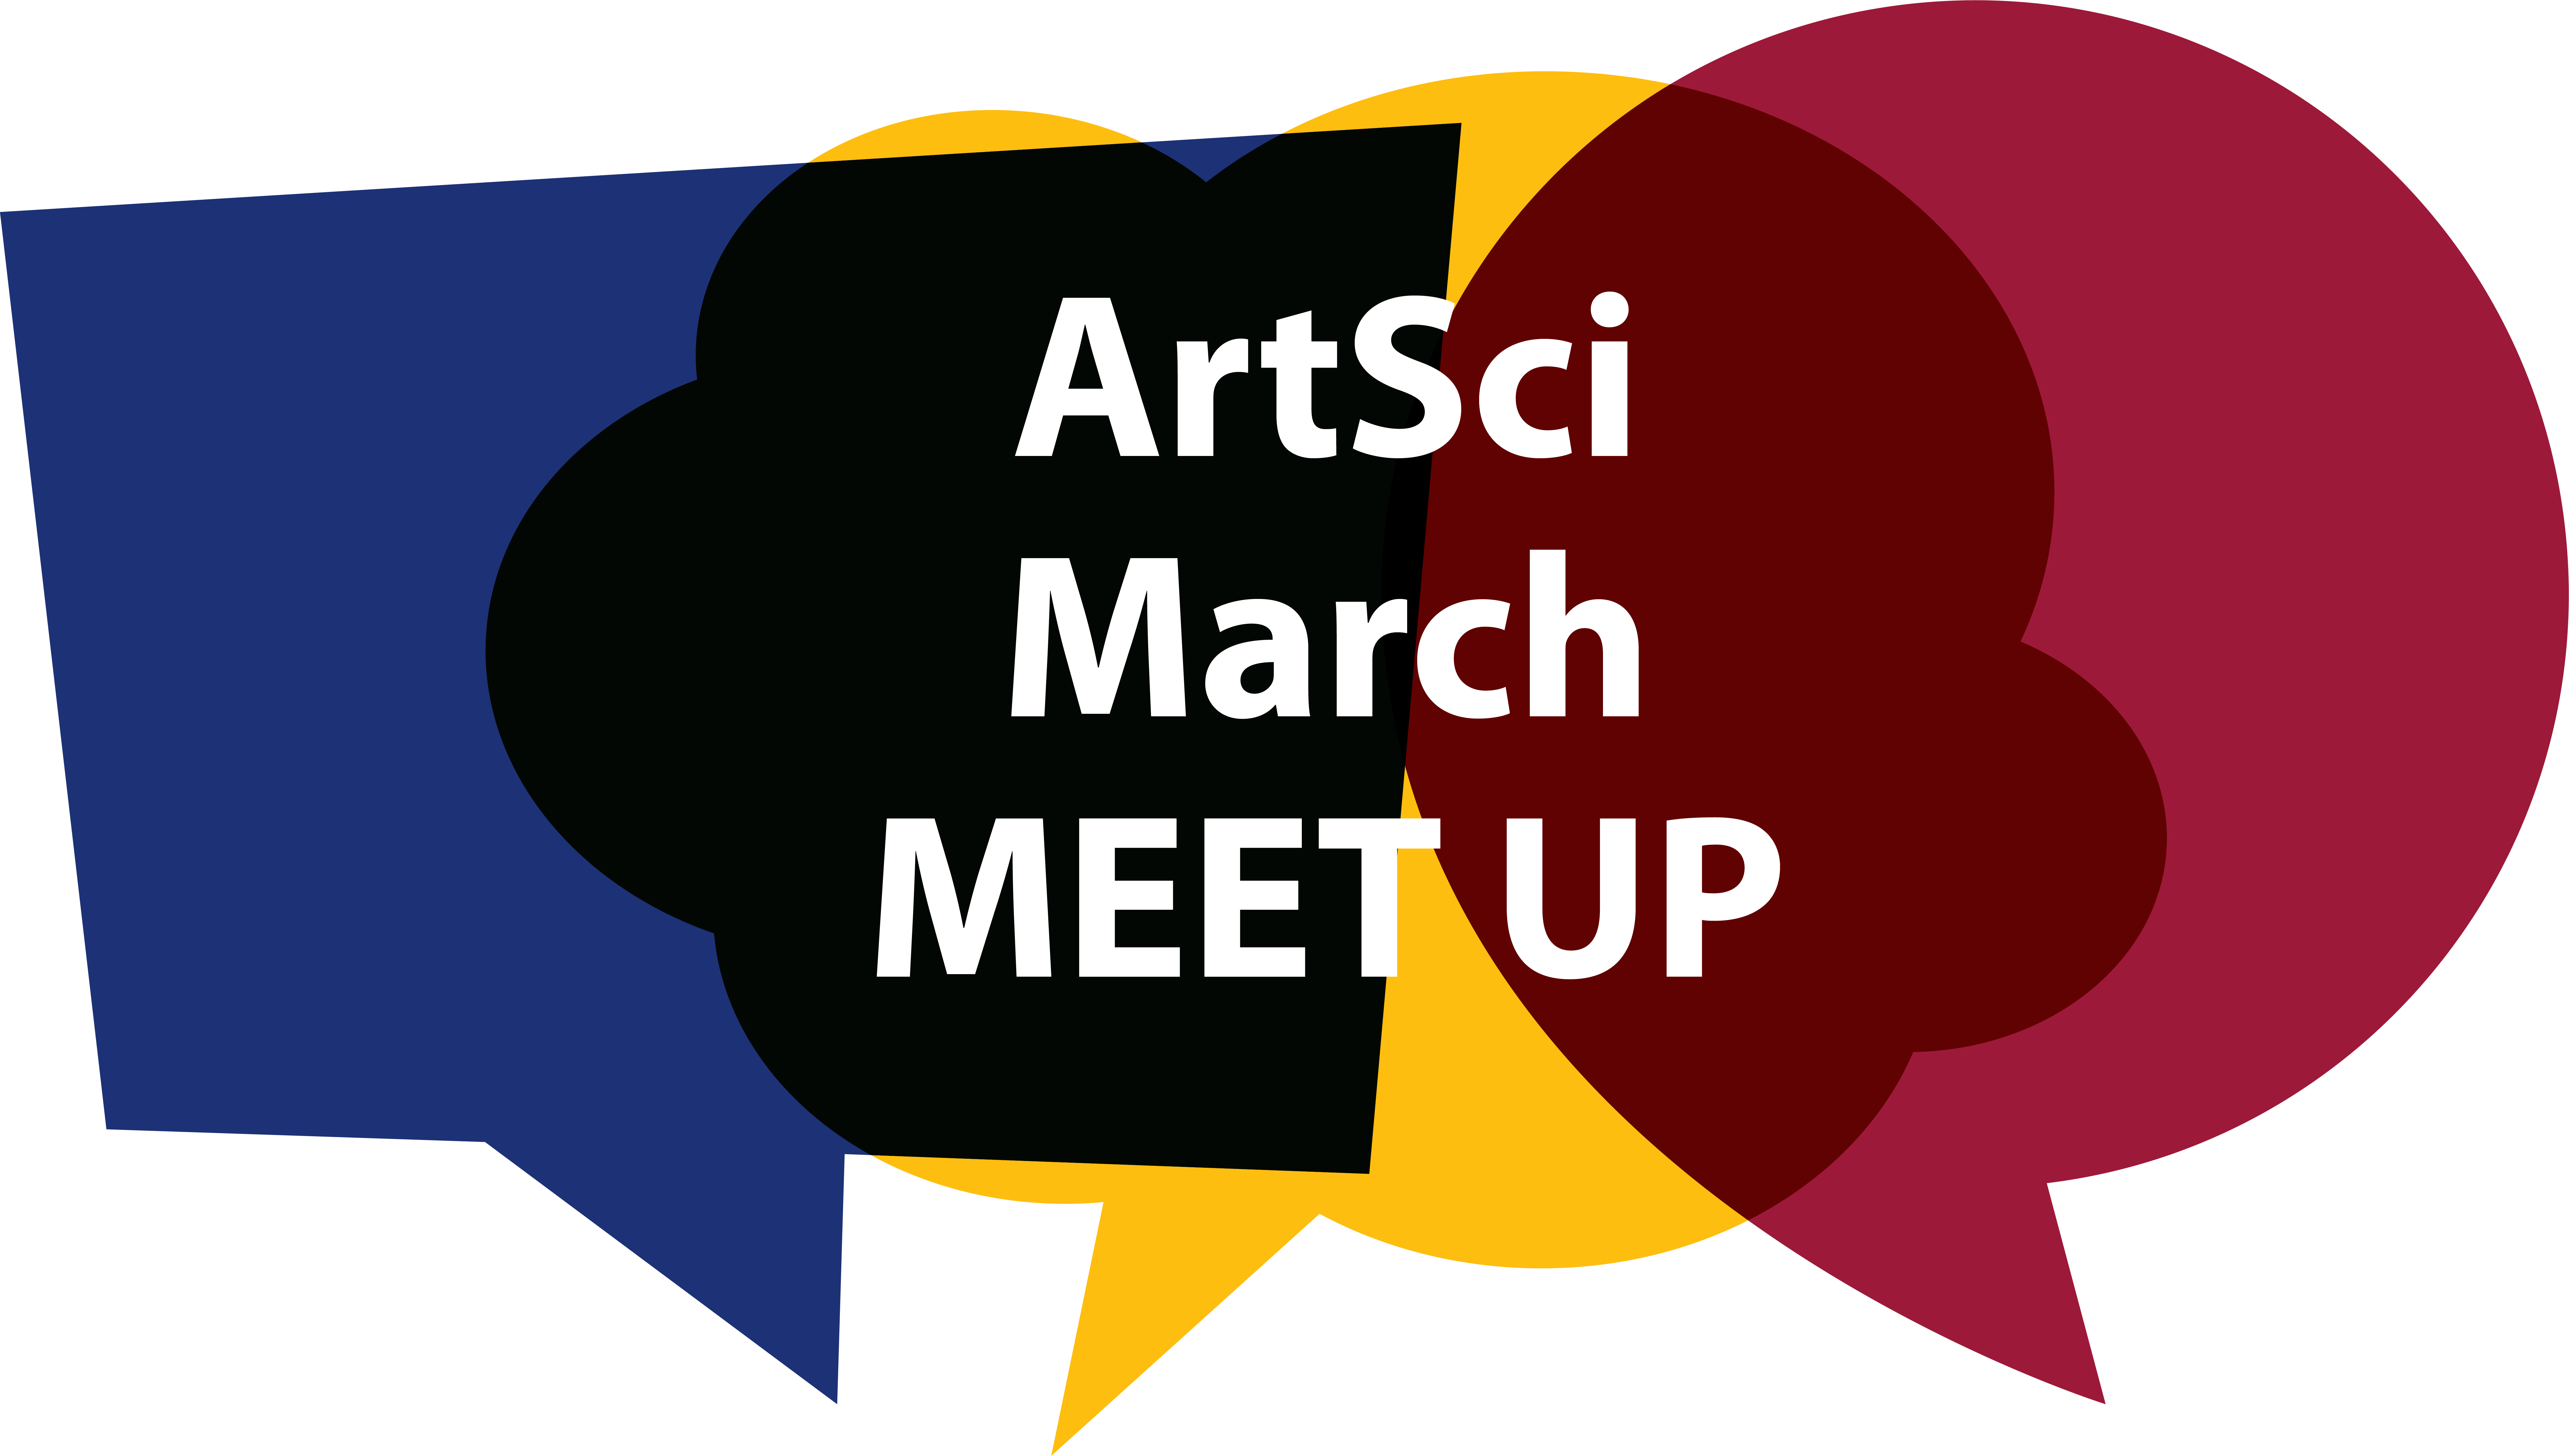 ArtSci March Meet Up